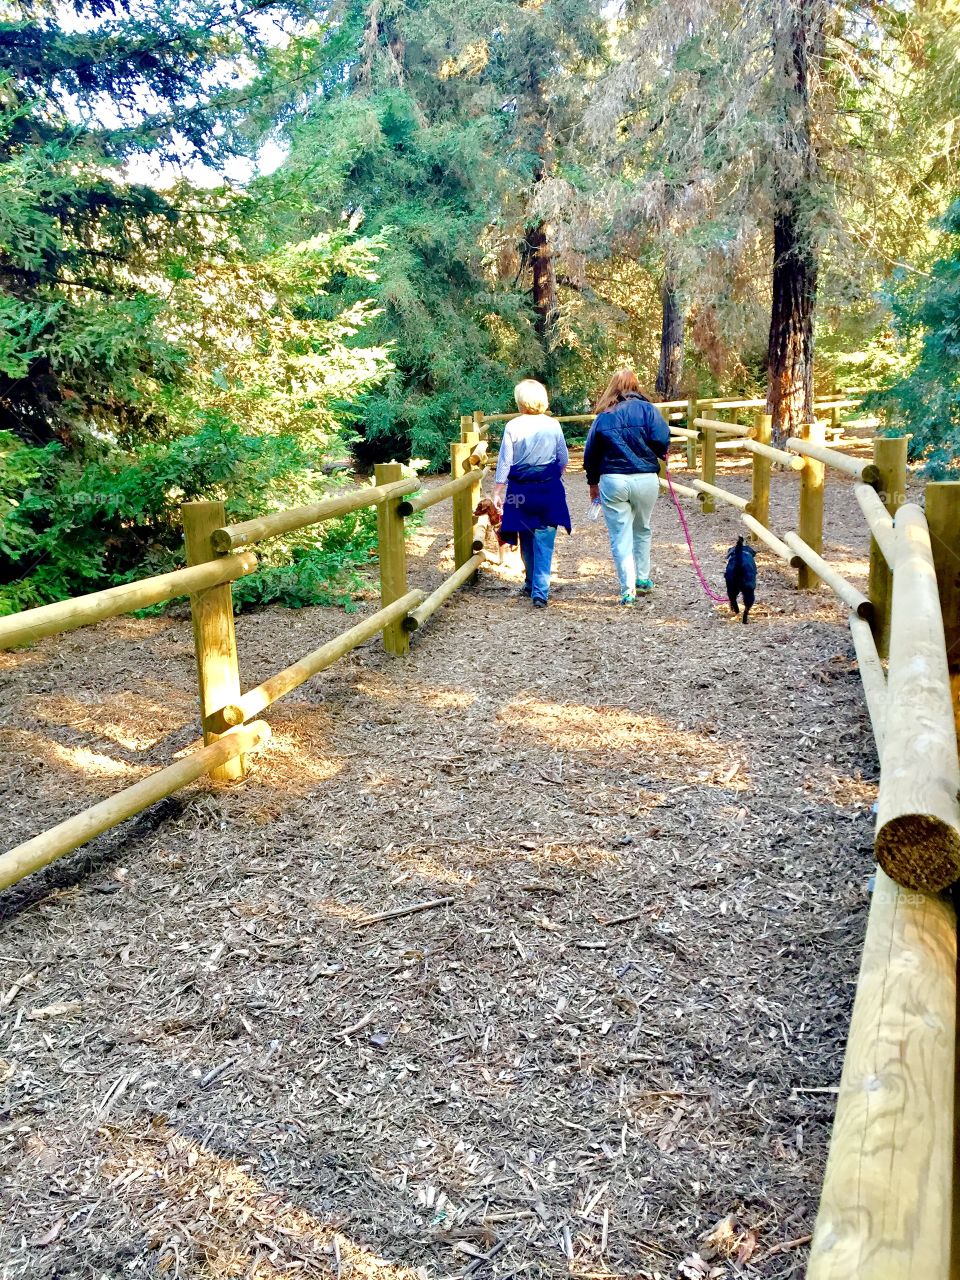 Just an afternoon walk through redwoods